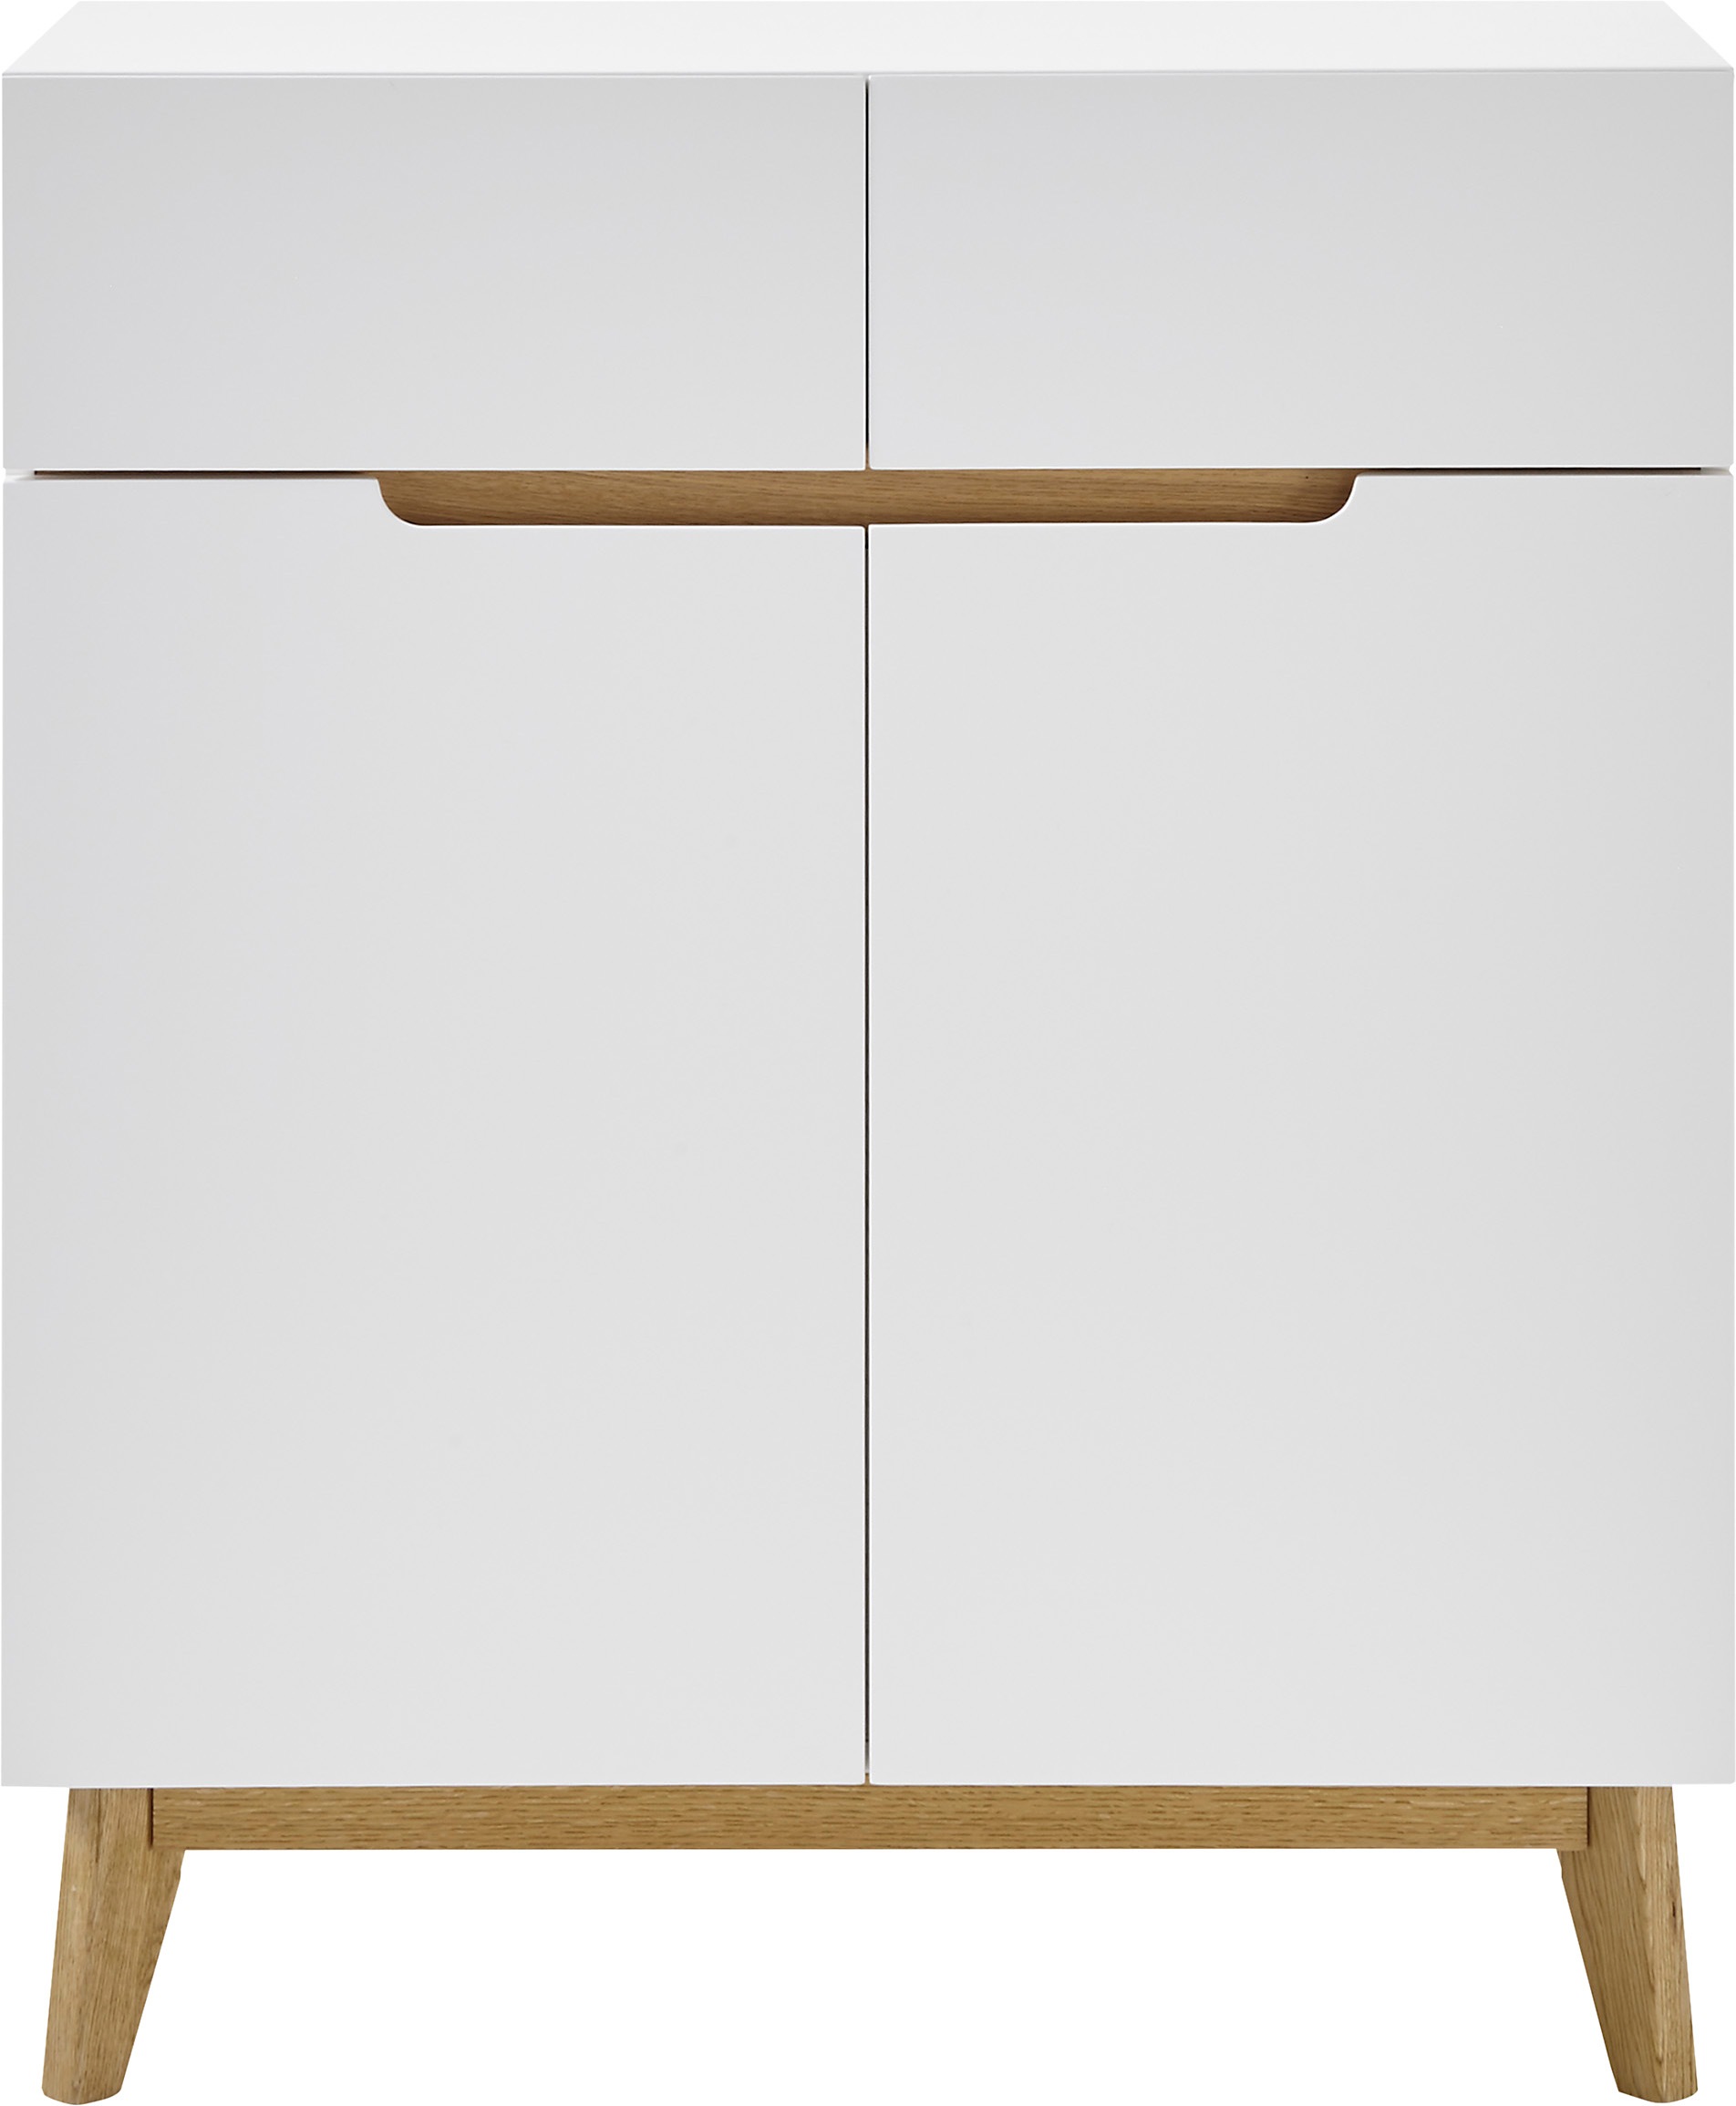 MCA furniture Garderobenschrank »Cervo«, Breite ca. 85 cm